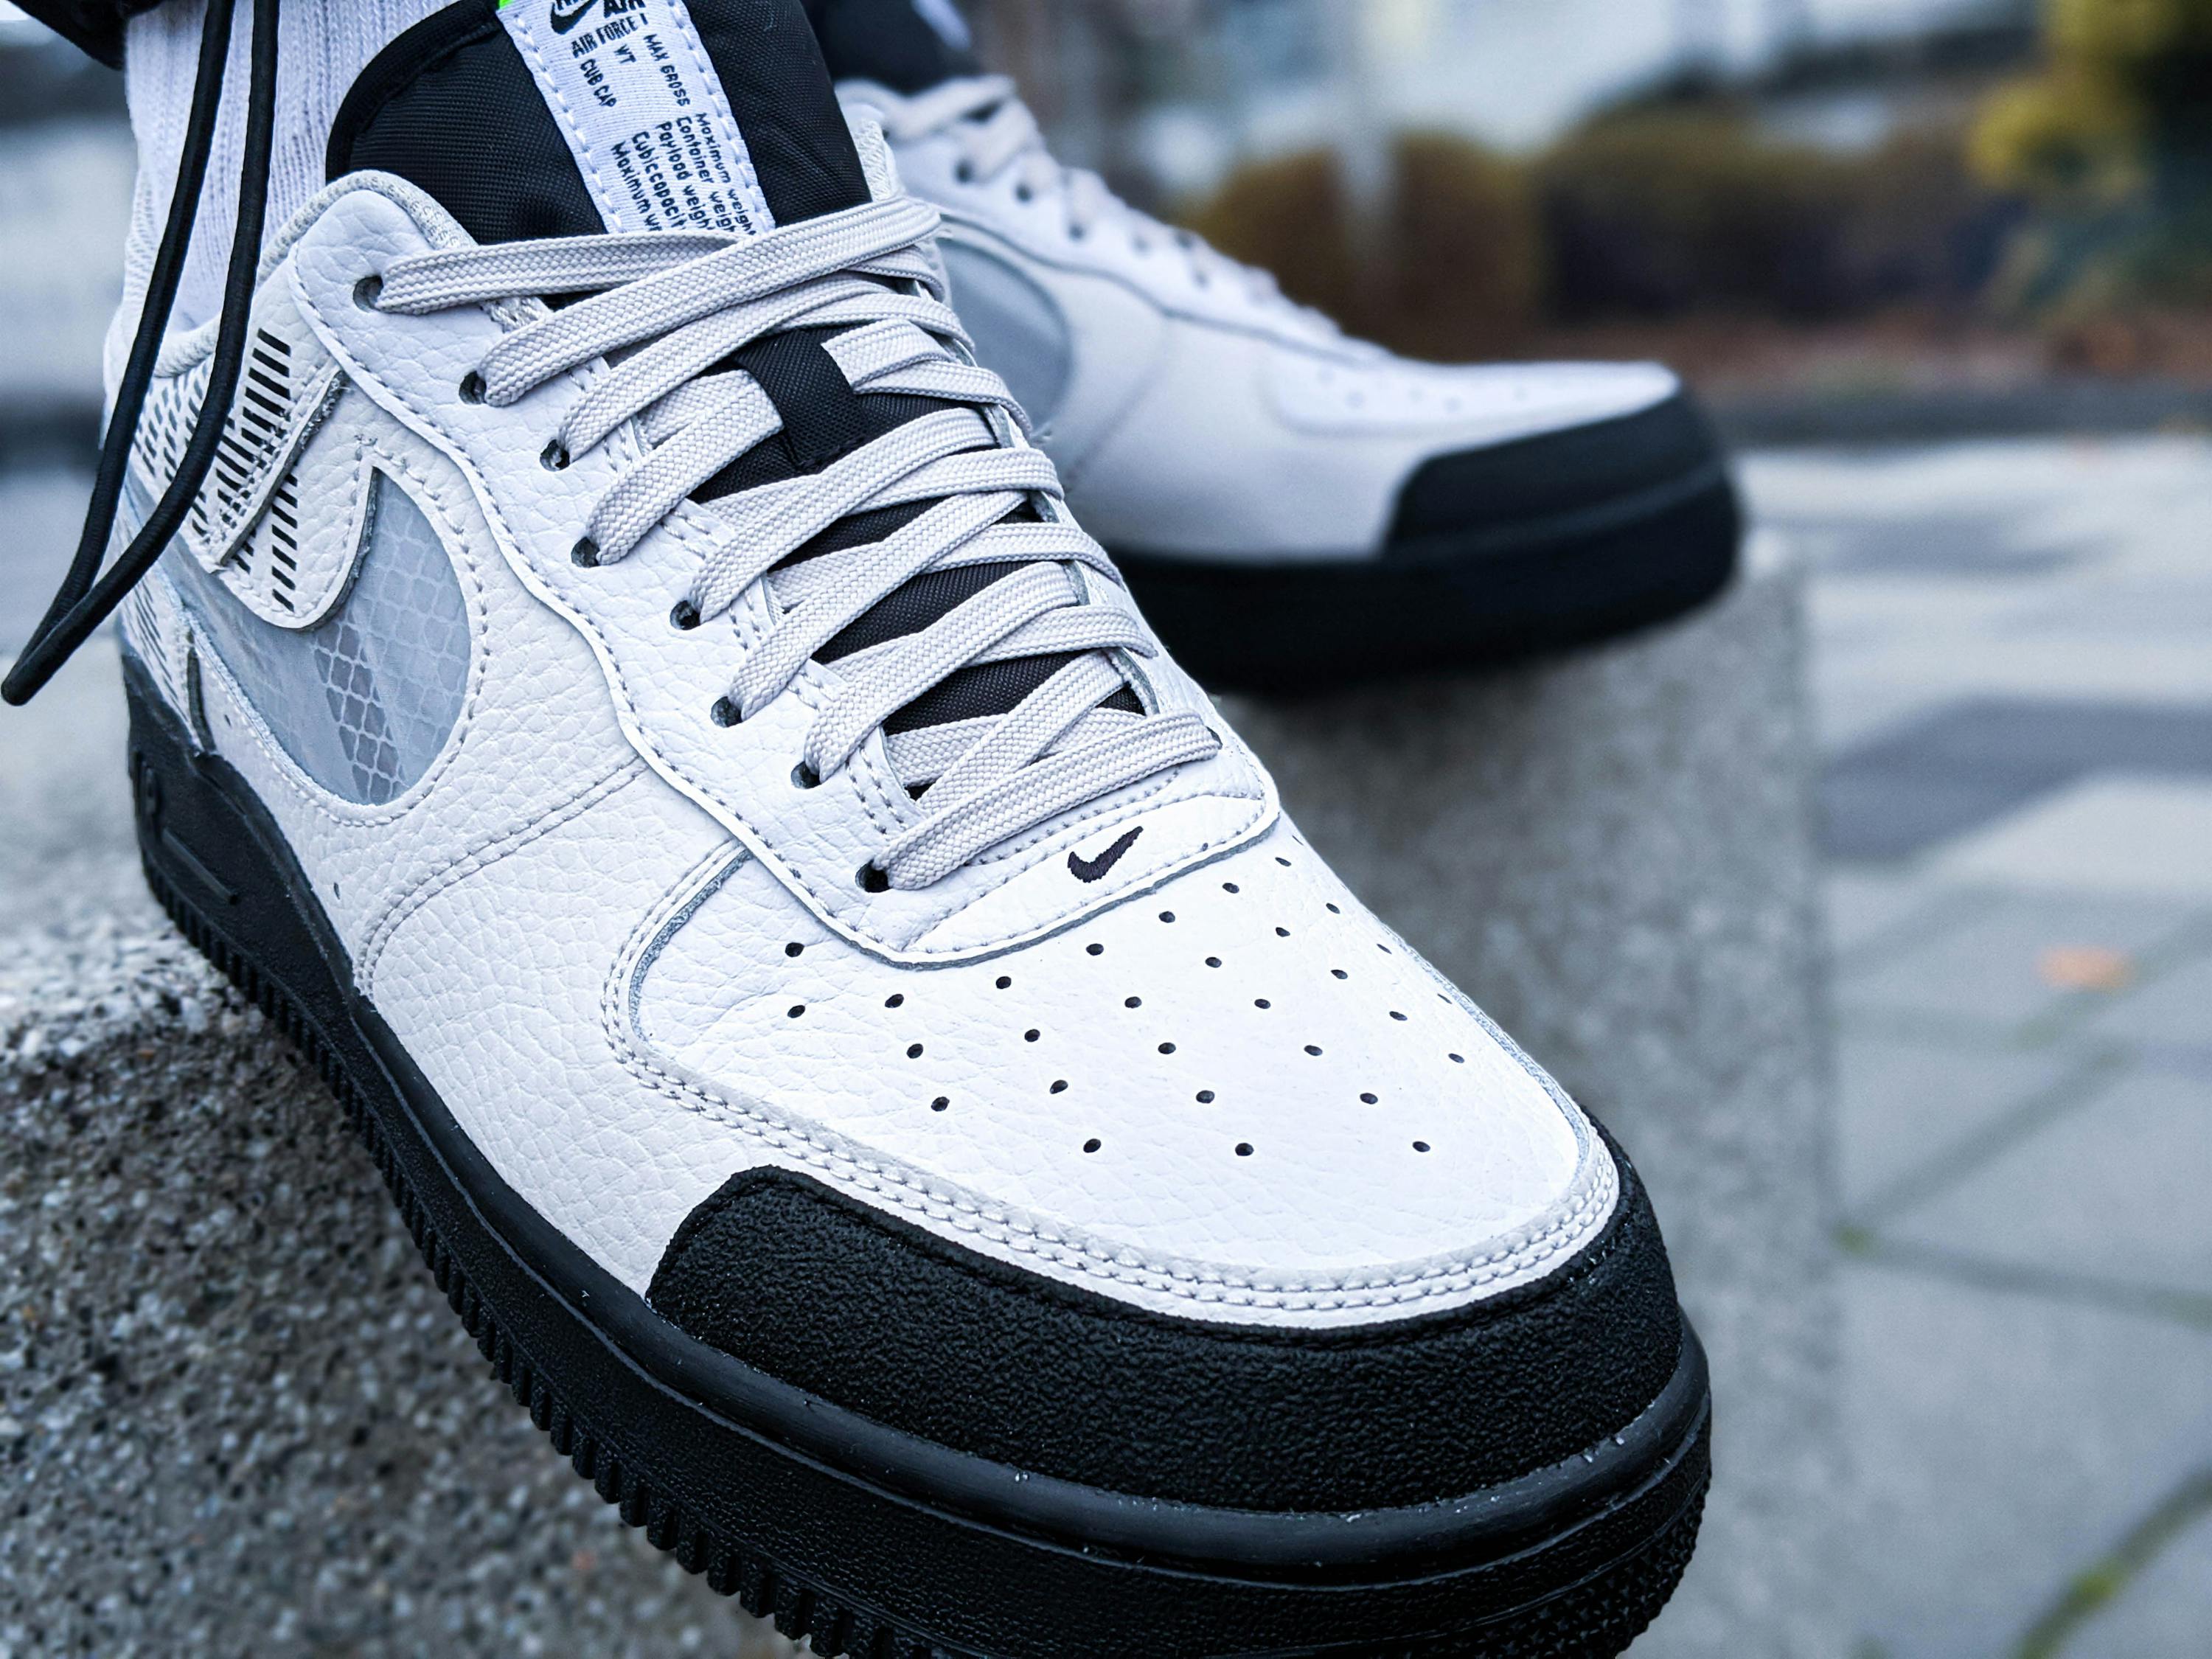 5. "Nike Air Jordan 1 Custom Sneakers with Nail Art" - wide 6